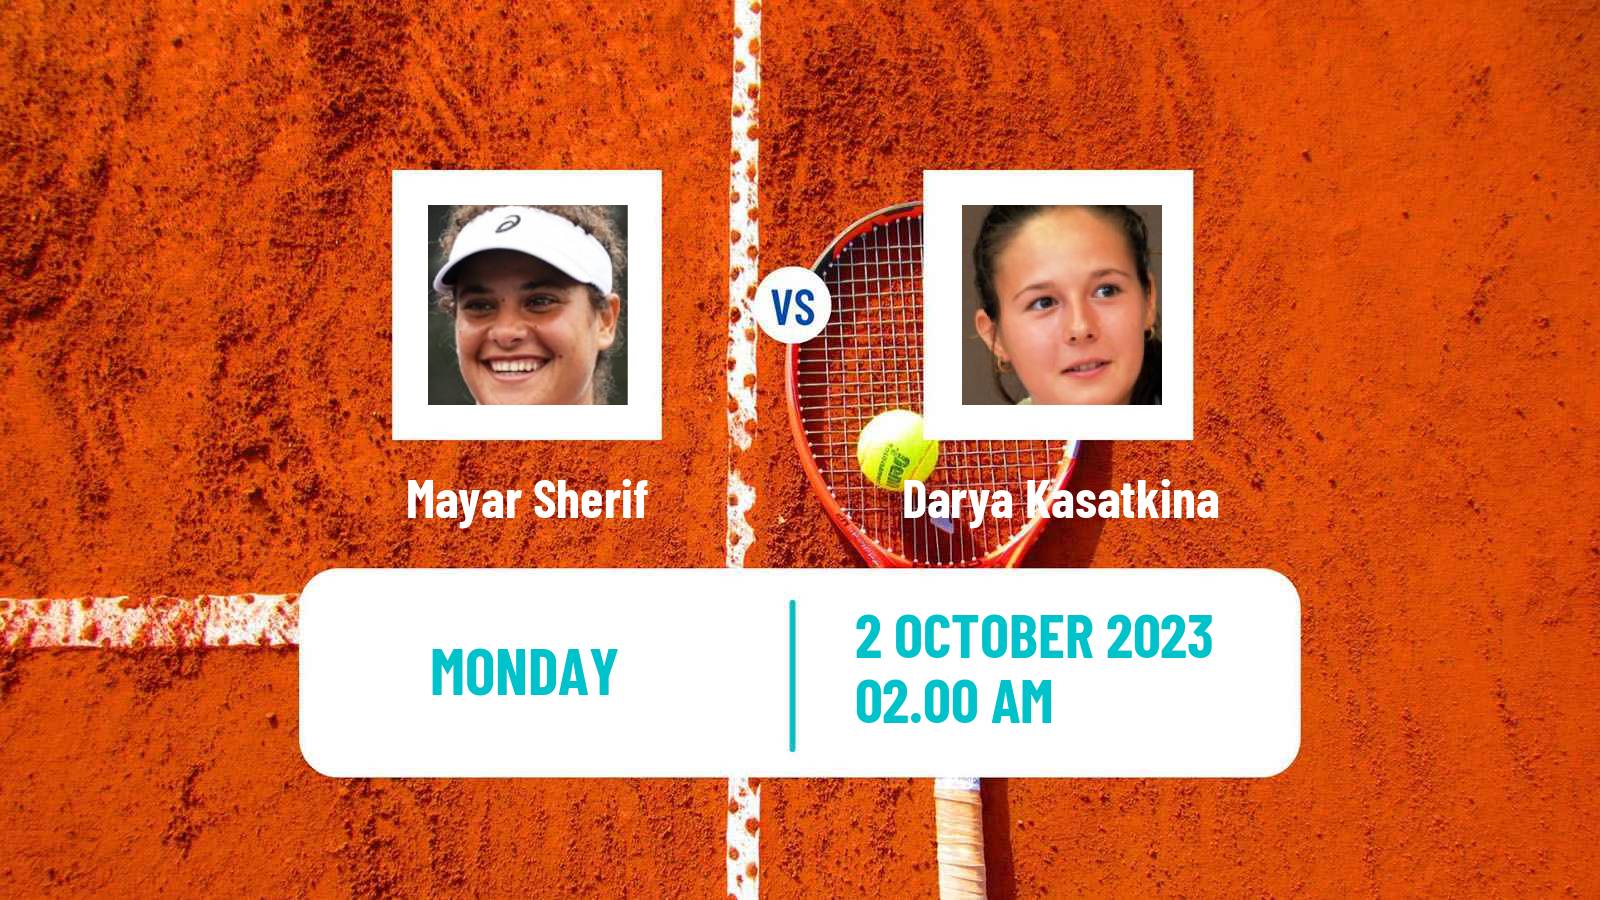 Tennis WTA Beijing Mayar Sherif - Darya Kasatkina